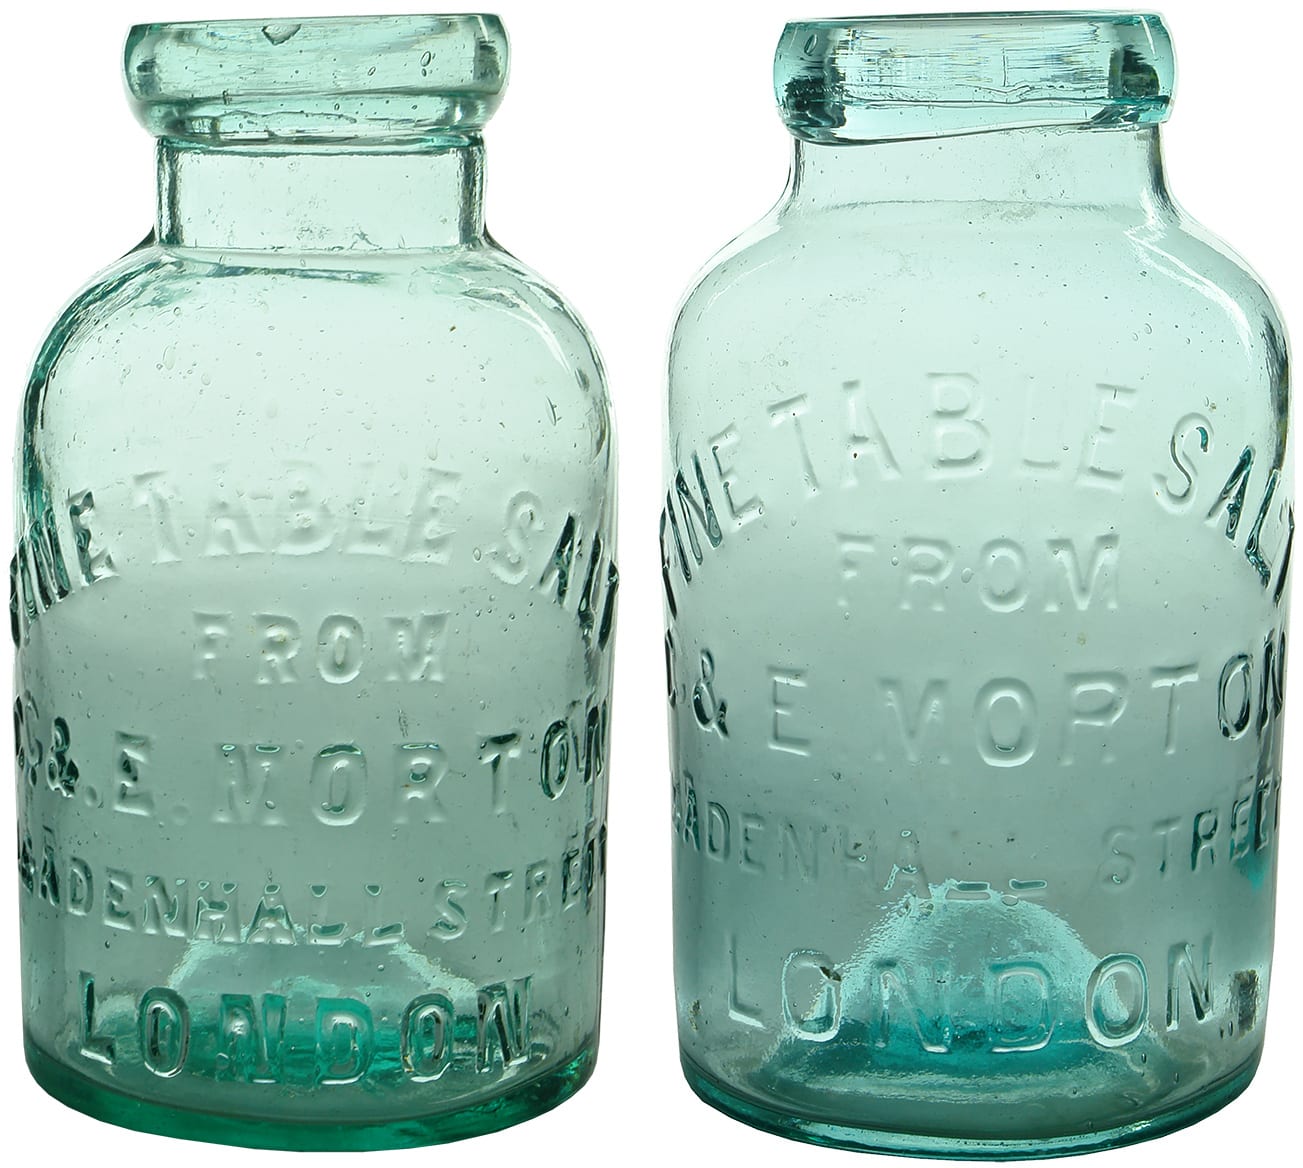 Morton London Salt Jars